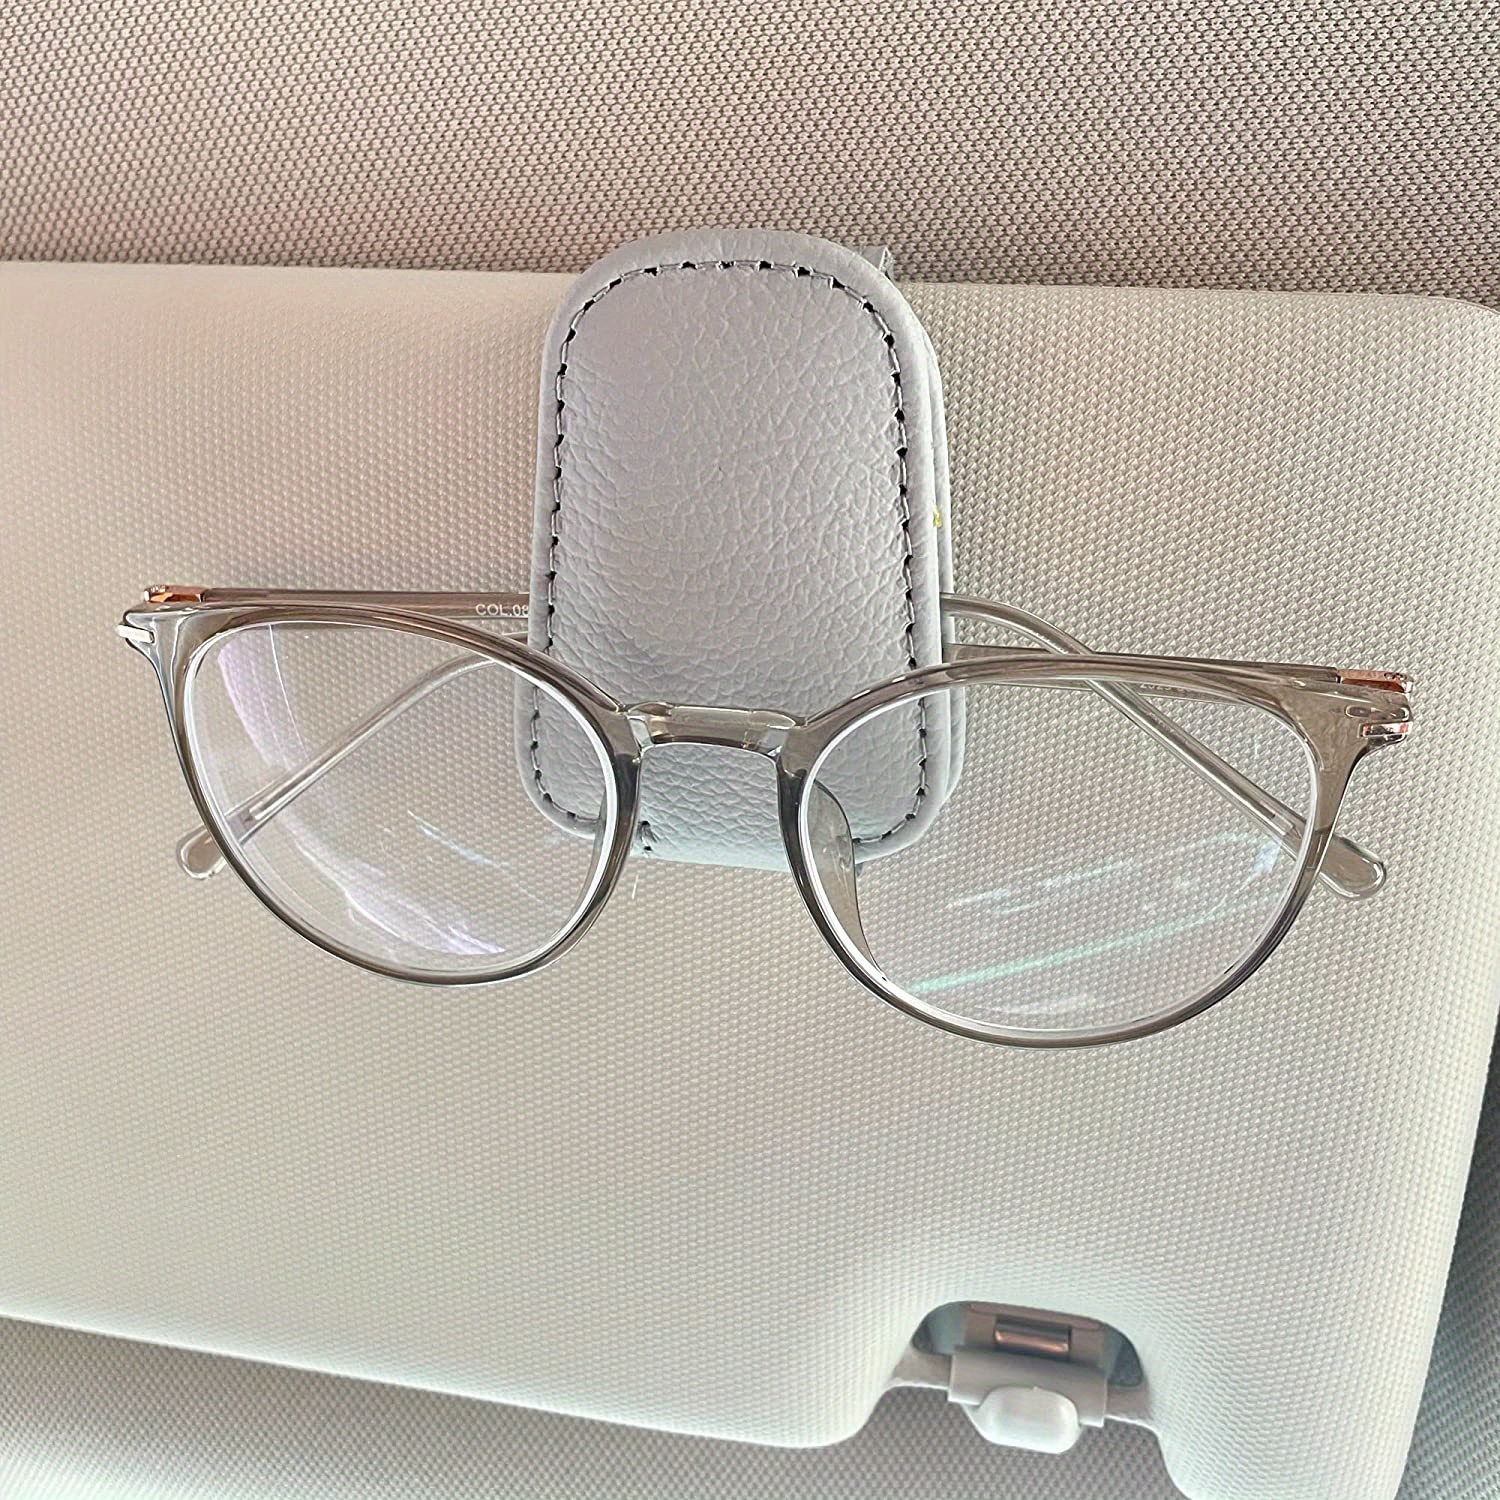 Ompellus Magnetic Leather Sunglass Holder, Eyeglass Hanging Clip for Car  Sun Visor, Car Accessories (Beige) 